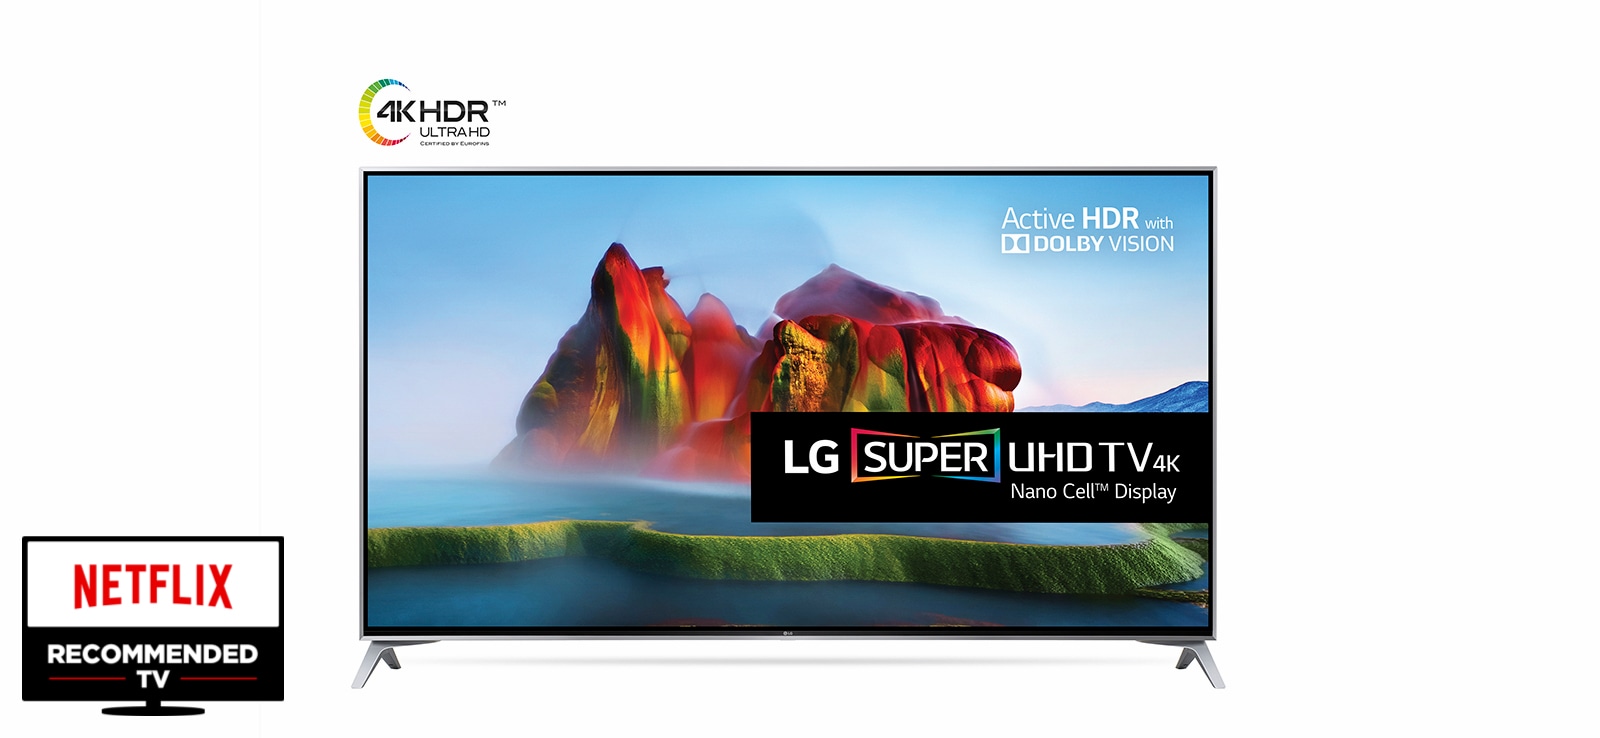 LG 49'' (121 cm) SUPER Ultra HD televizor s IPS 4K Nano Cell™ Display zaslonom, Active HDR - Dolby Vision tehnologijom, webOS 3.5 i harman/kardon®audio sustavom, 49SJ800V